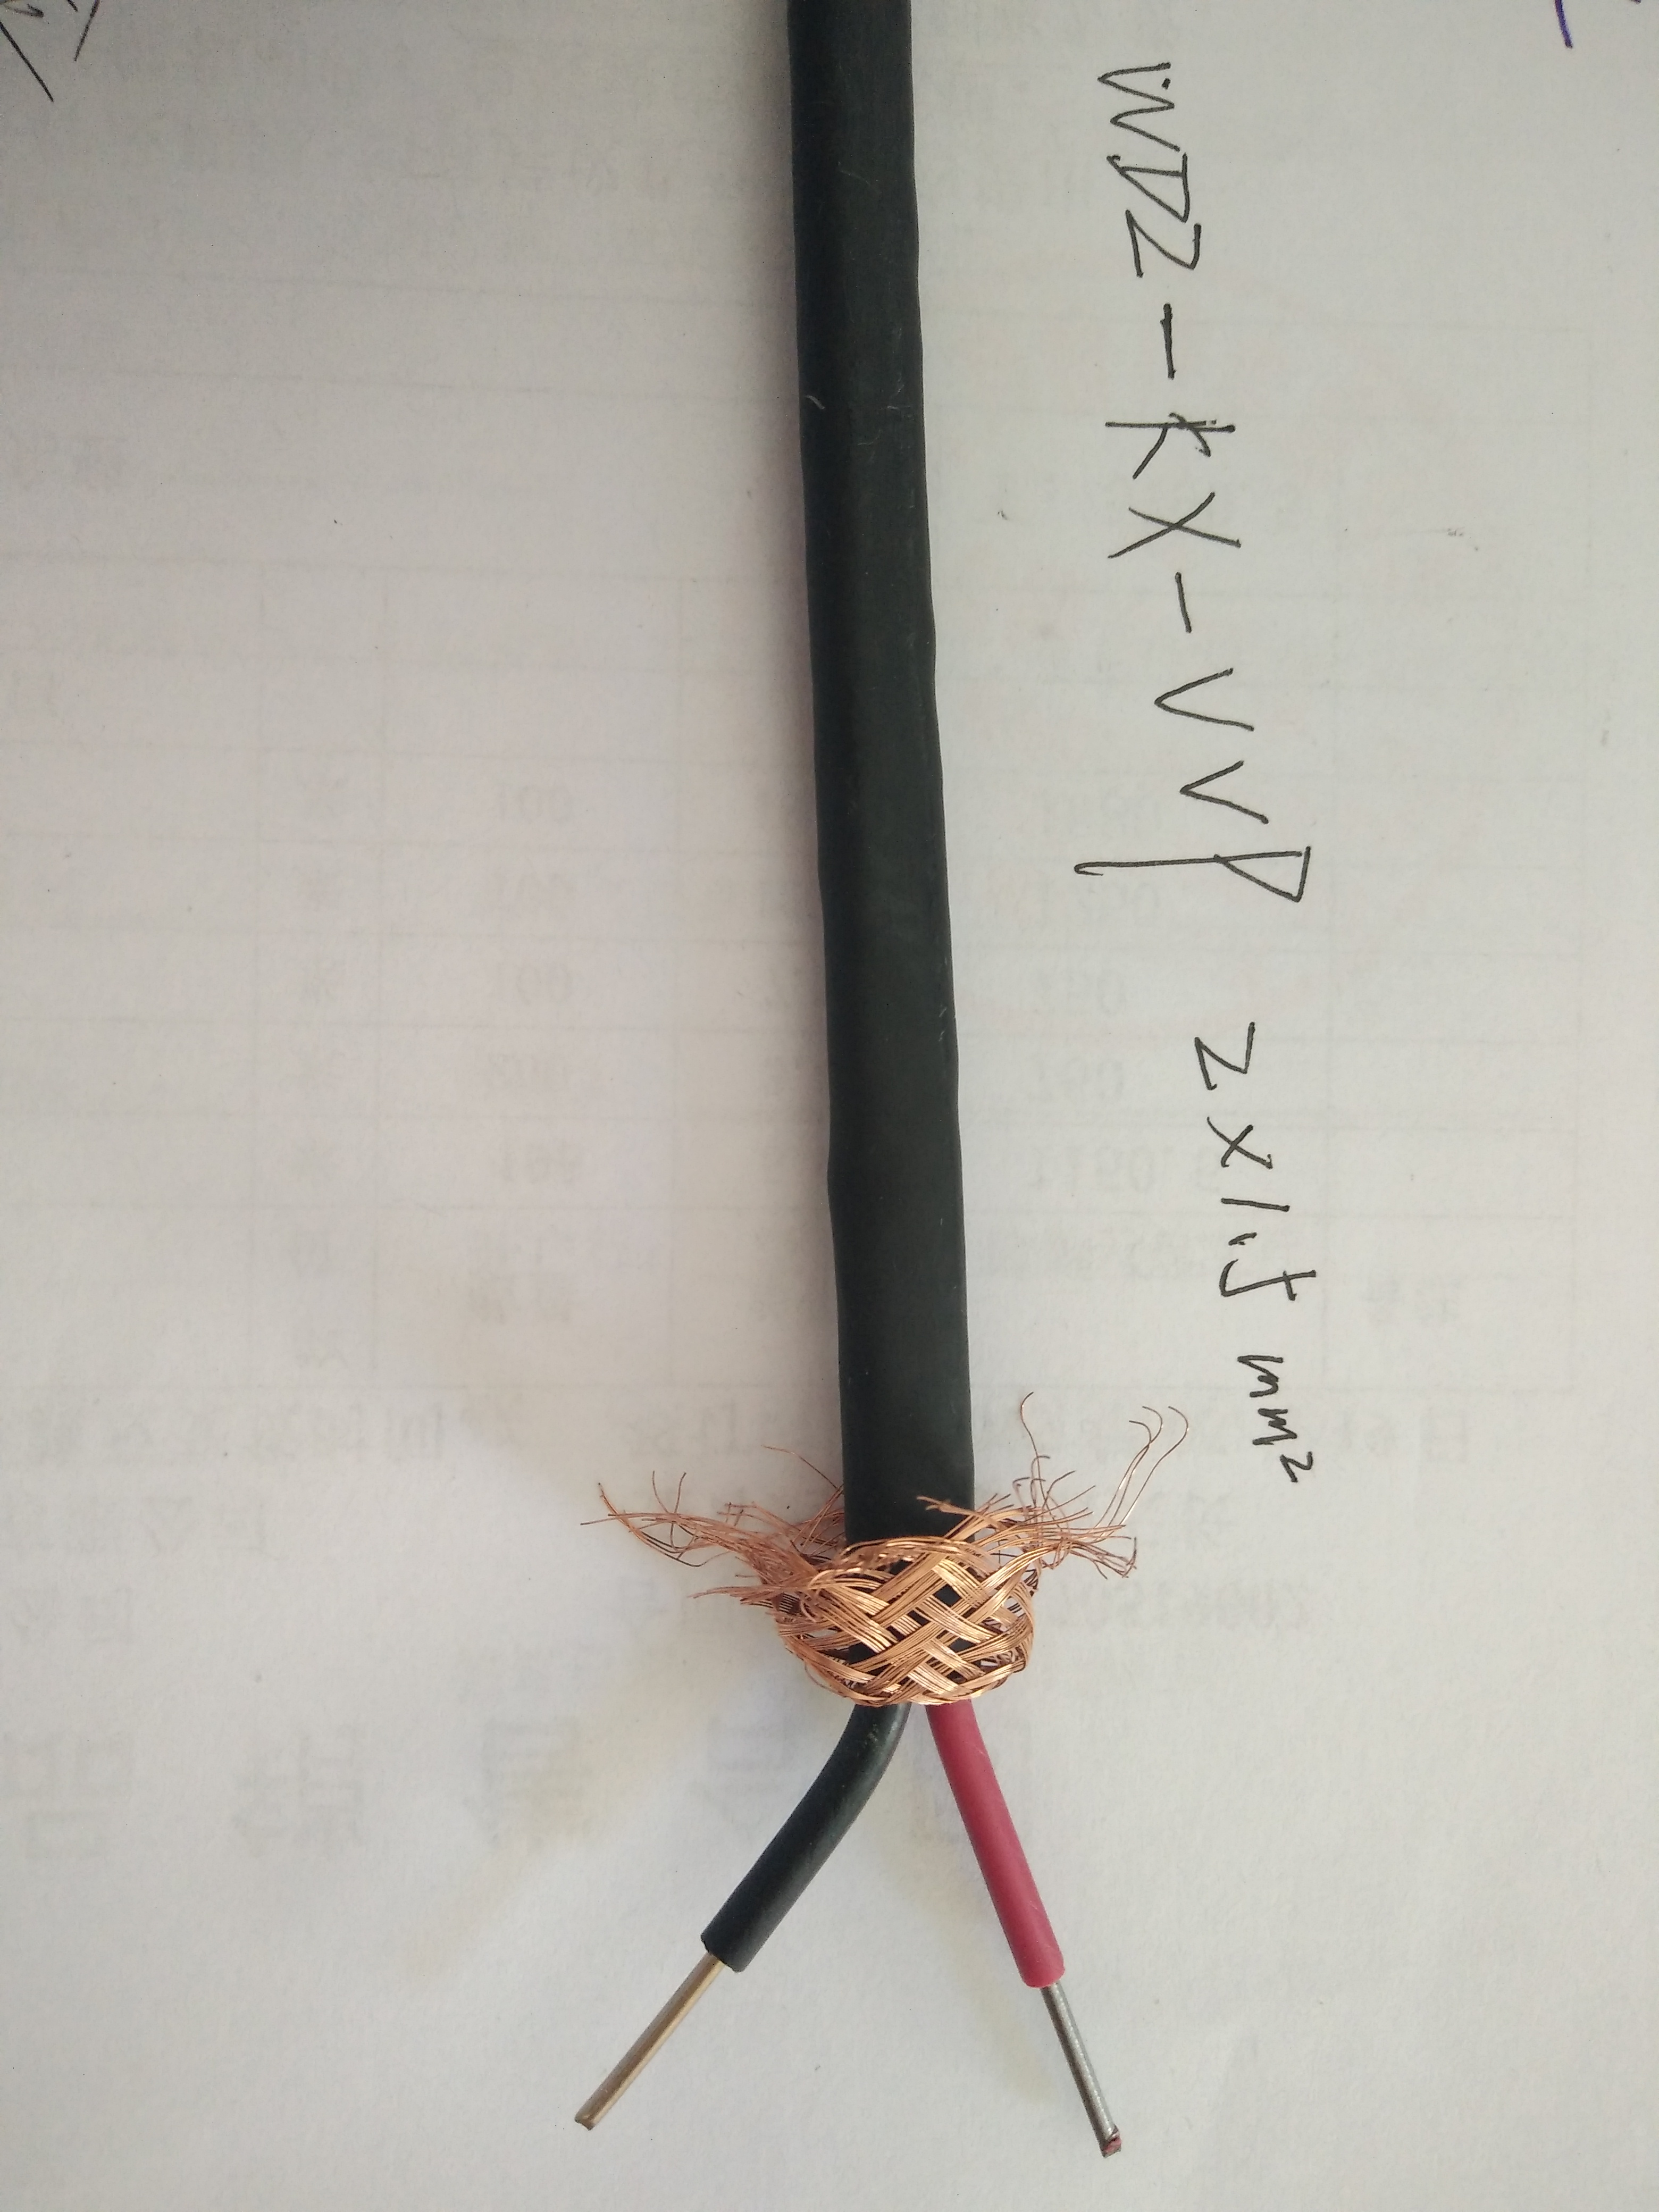 KX-HA-FVP热电偶用补偿导线及补偿电缆